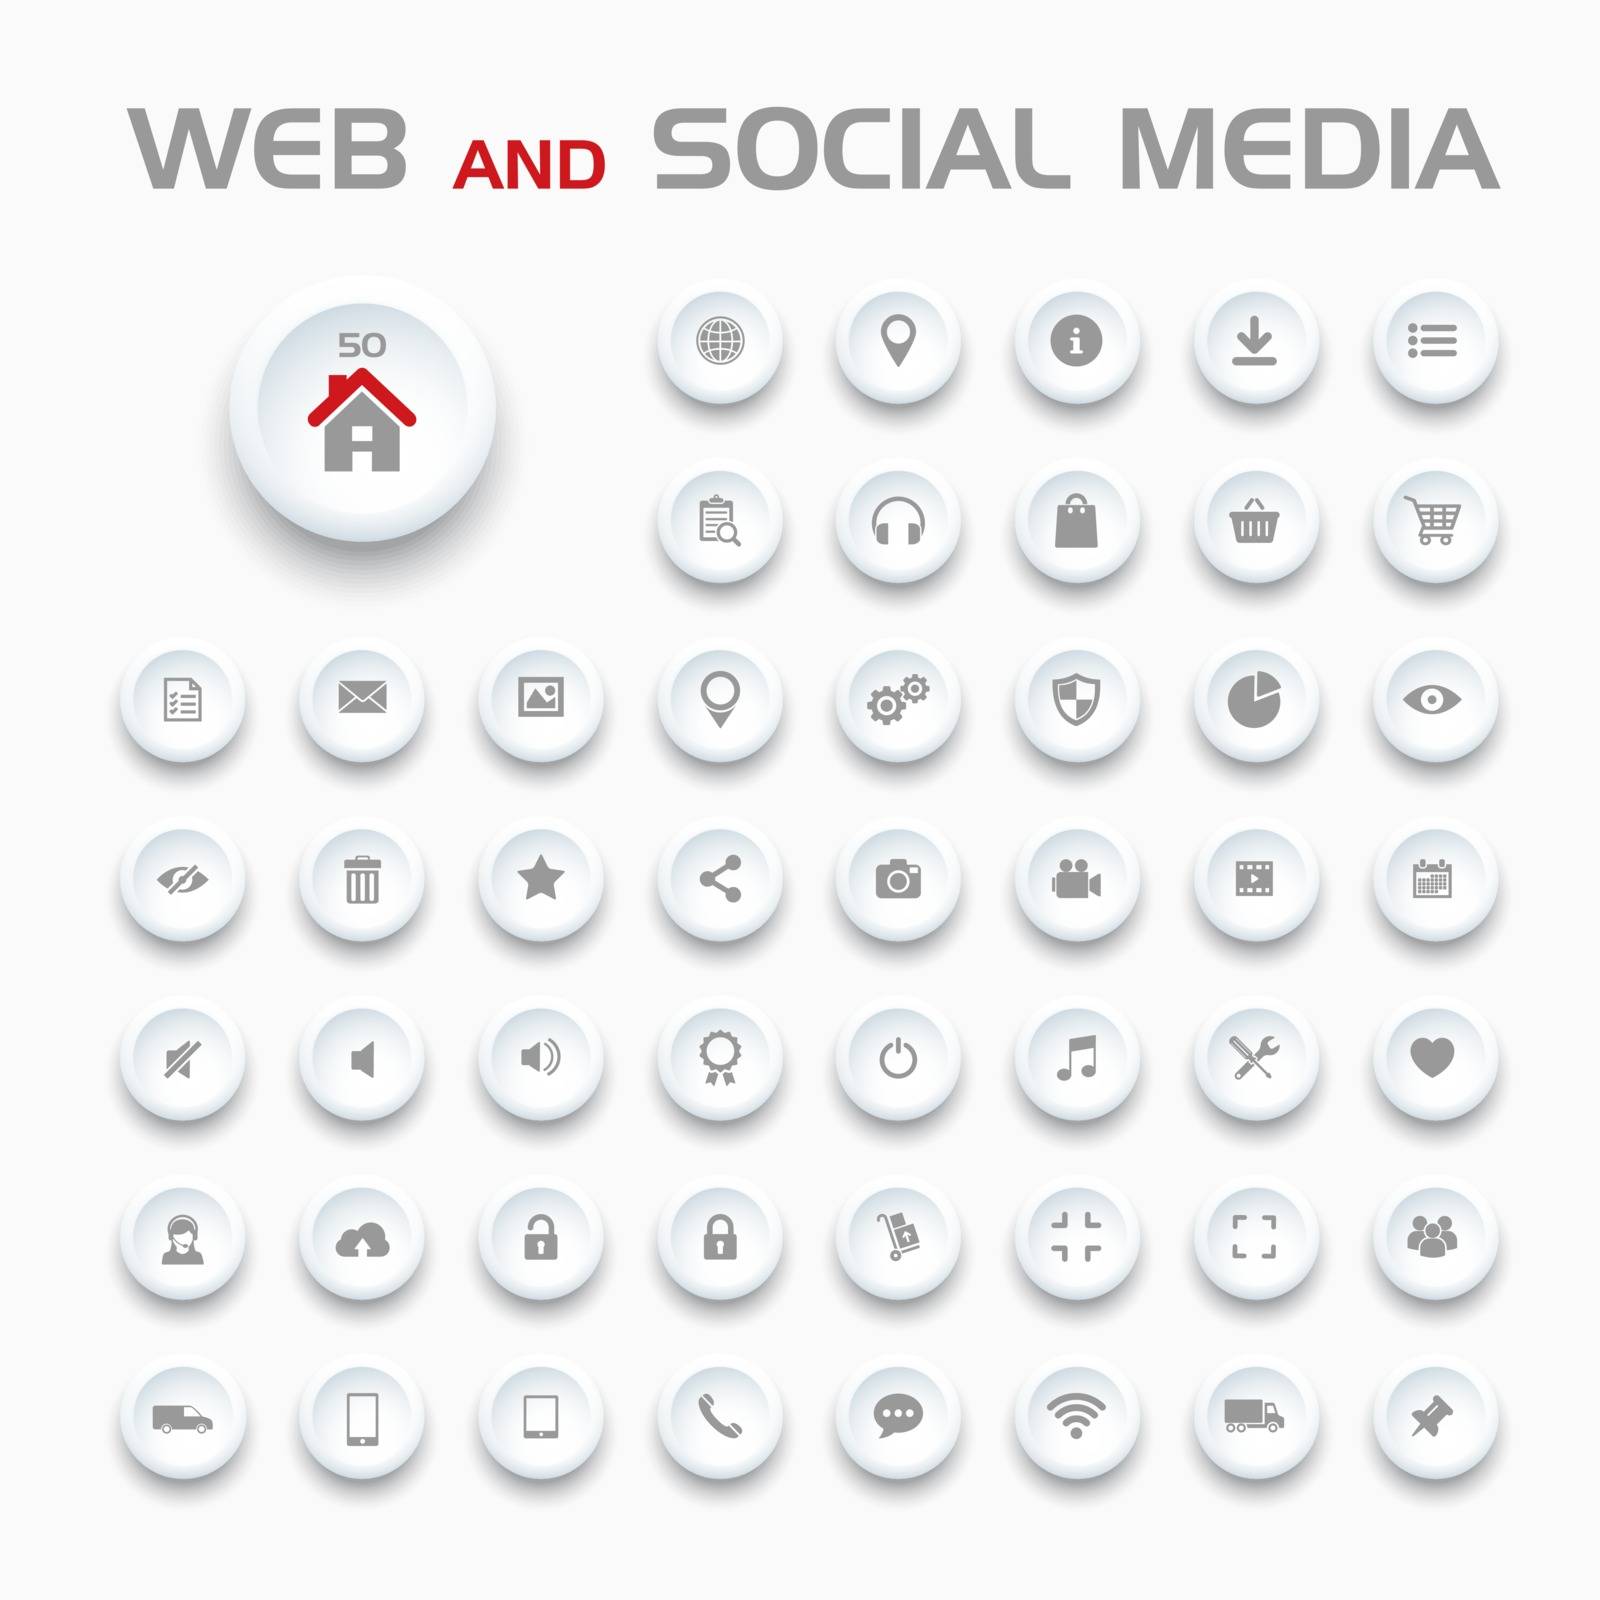 Web and social media by Imaagio